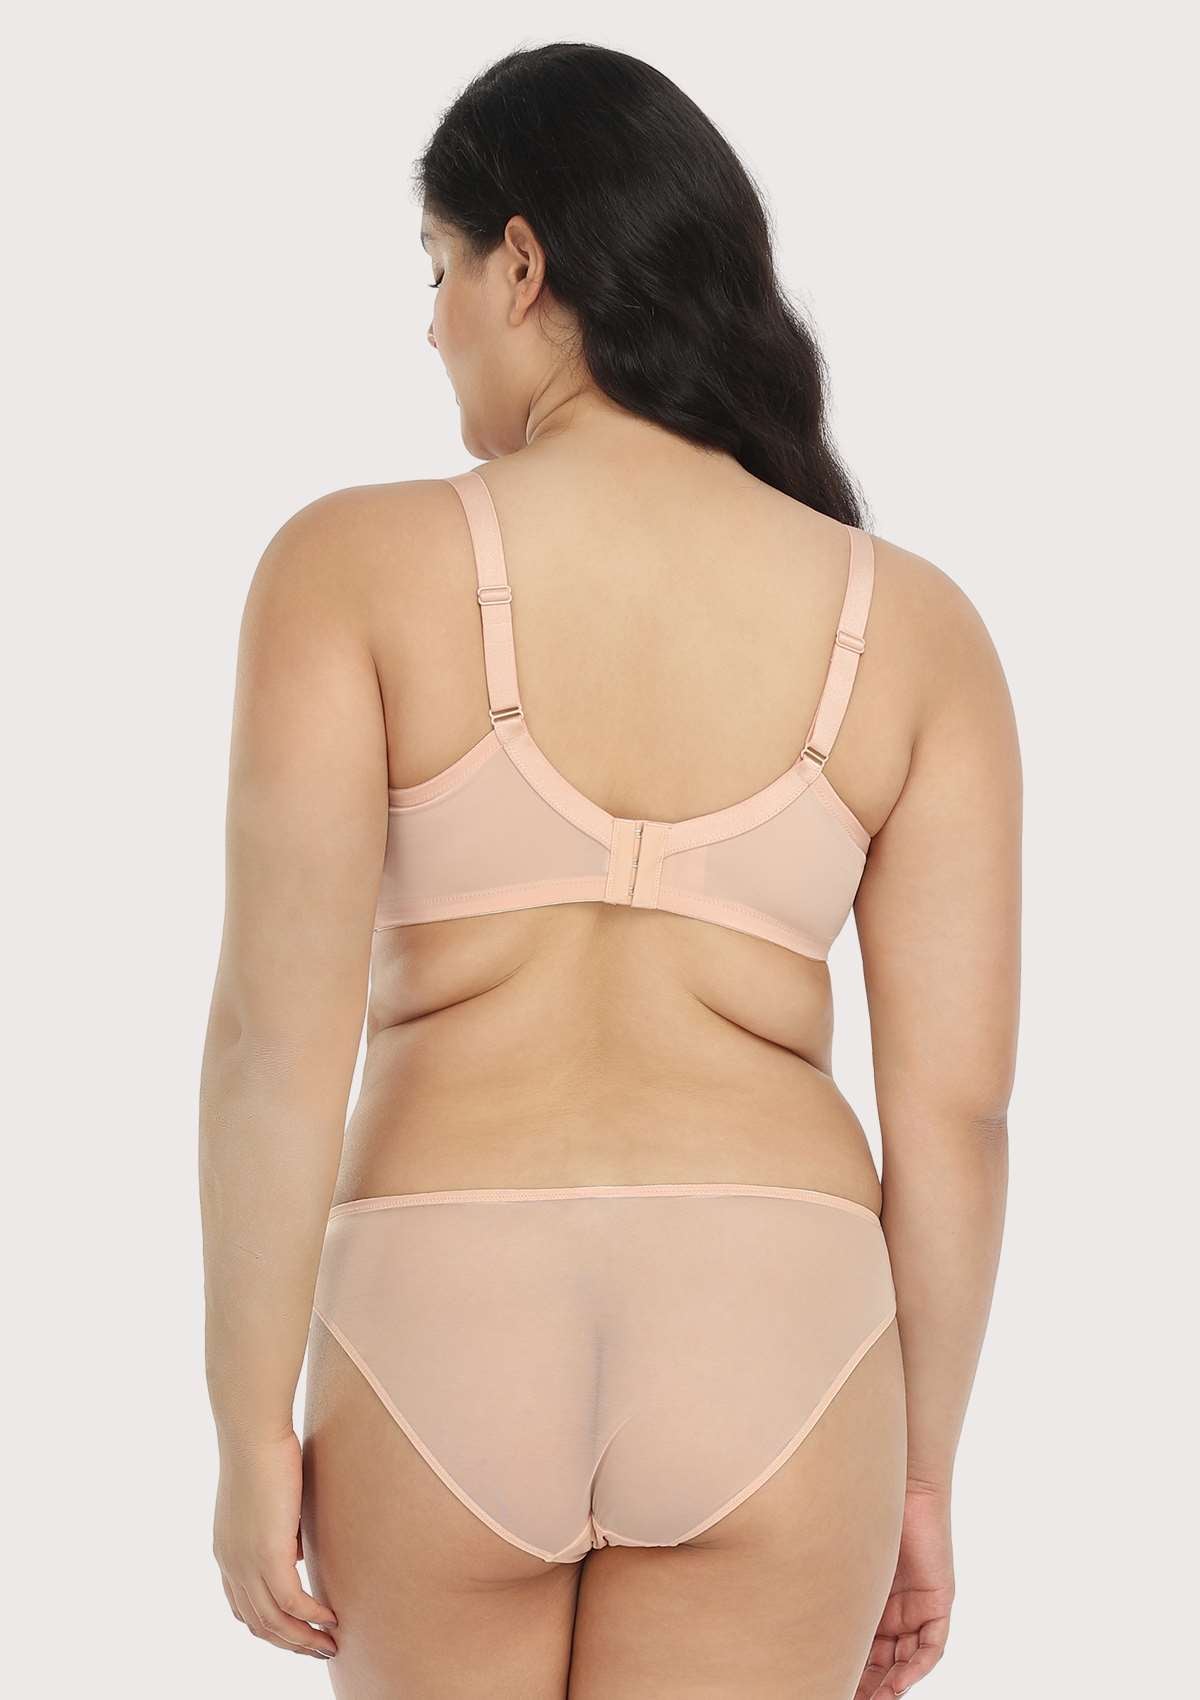 HSIA Sunflower Matching Bra And Panties Set: Comfortable Plus Size Bra - Pink / 44 / DDD/F